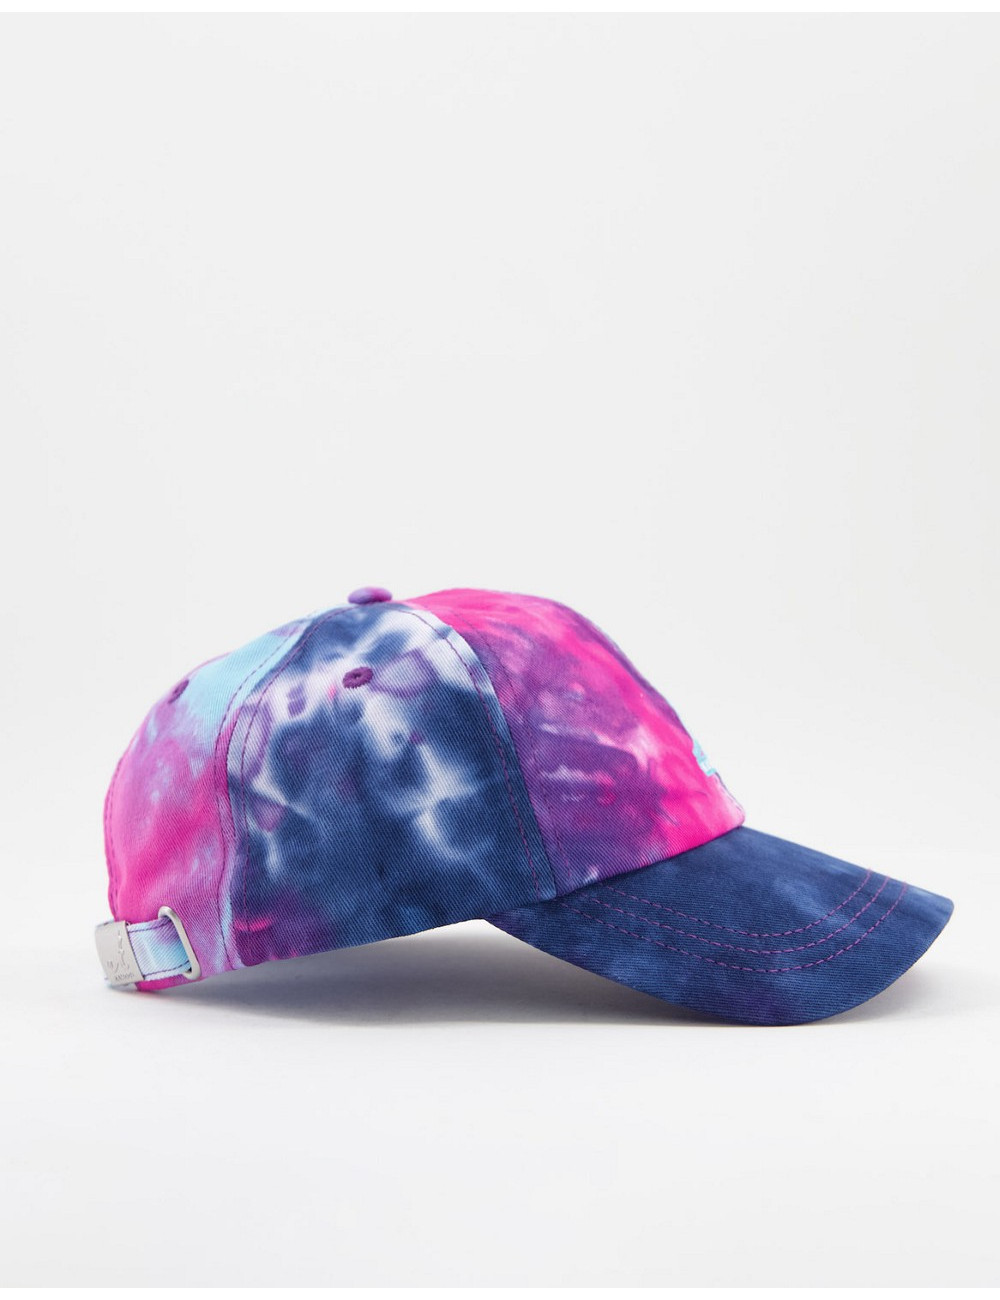 Kangol baseball cap in tie dye